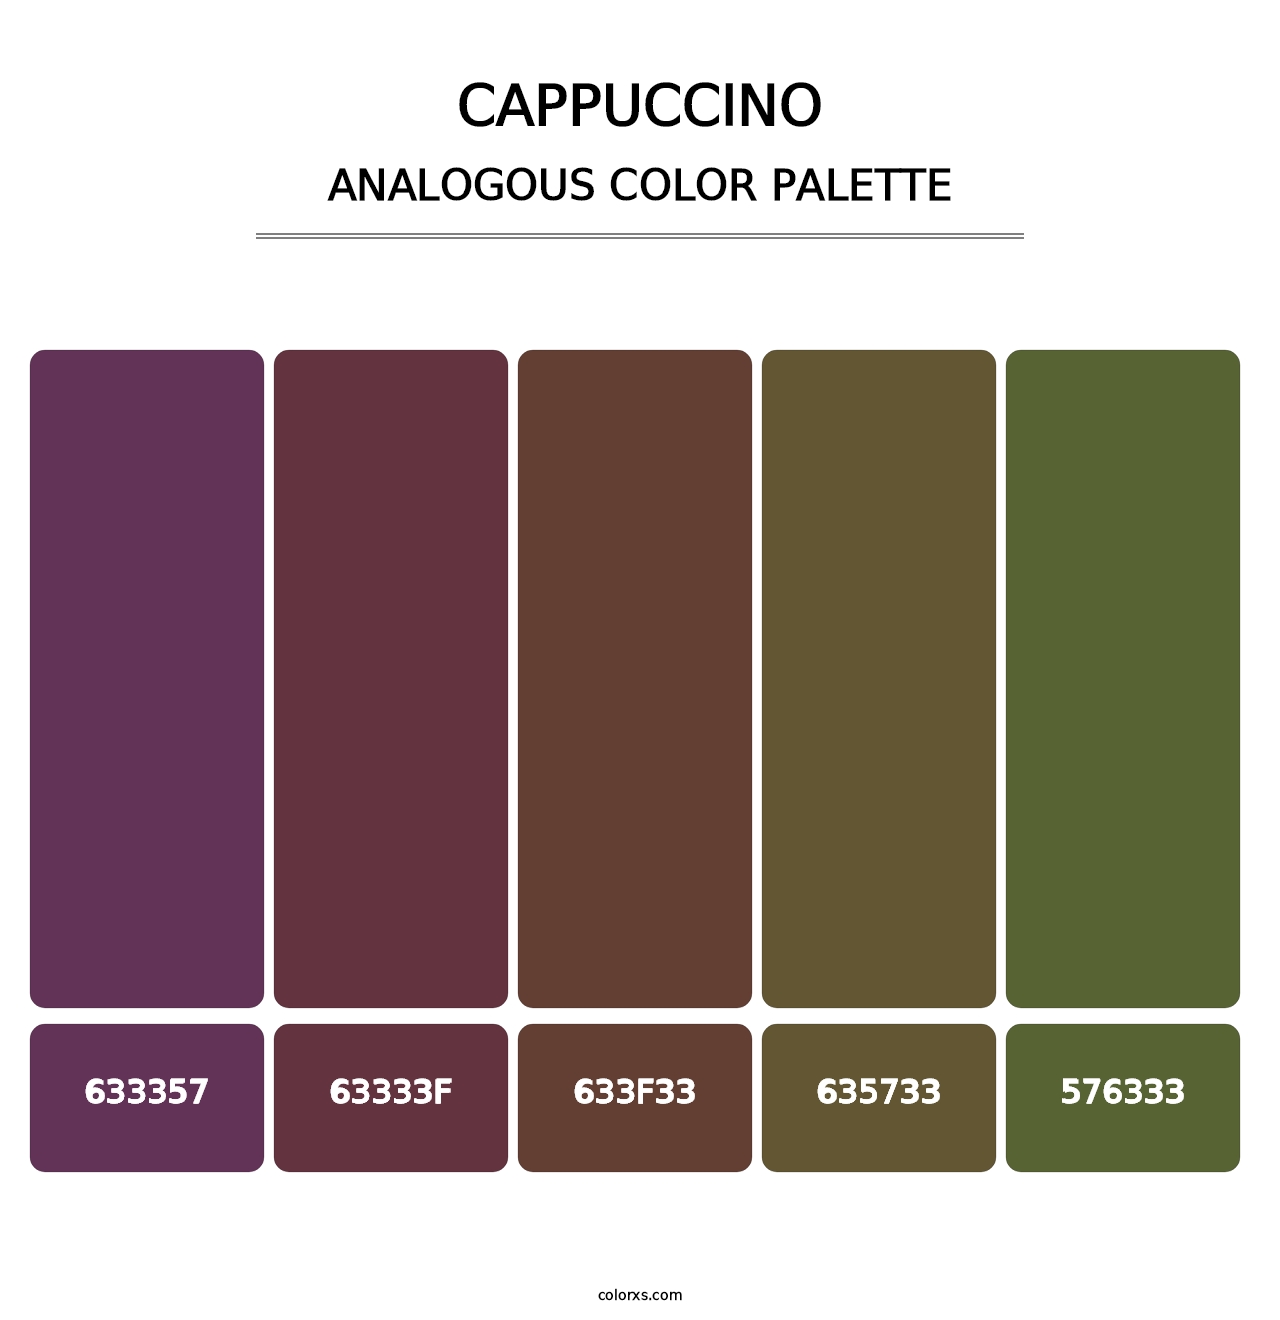 Cappuccino - Analogous Color Palette